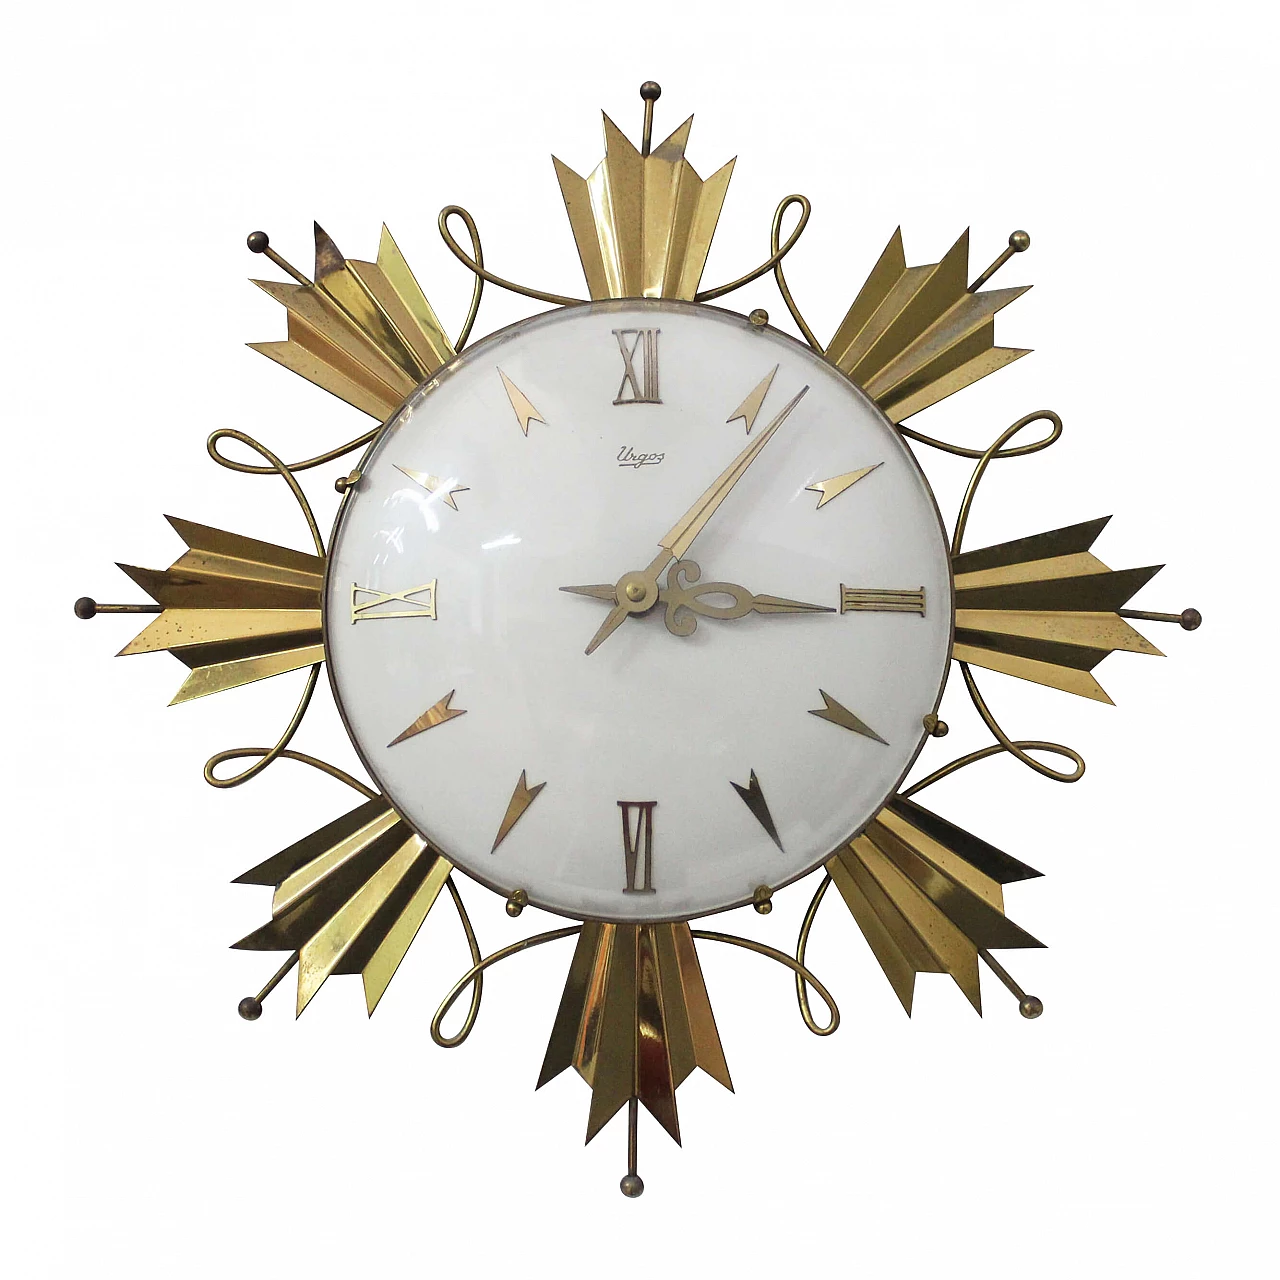 Urgos brass wall clock, 1940s 1098900